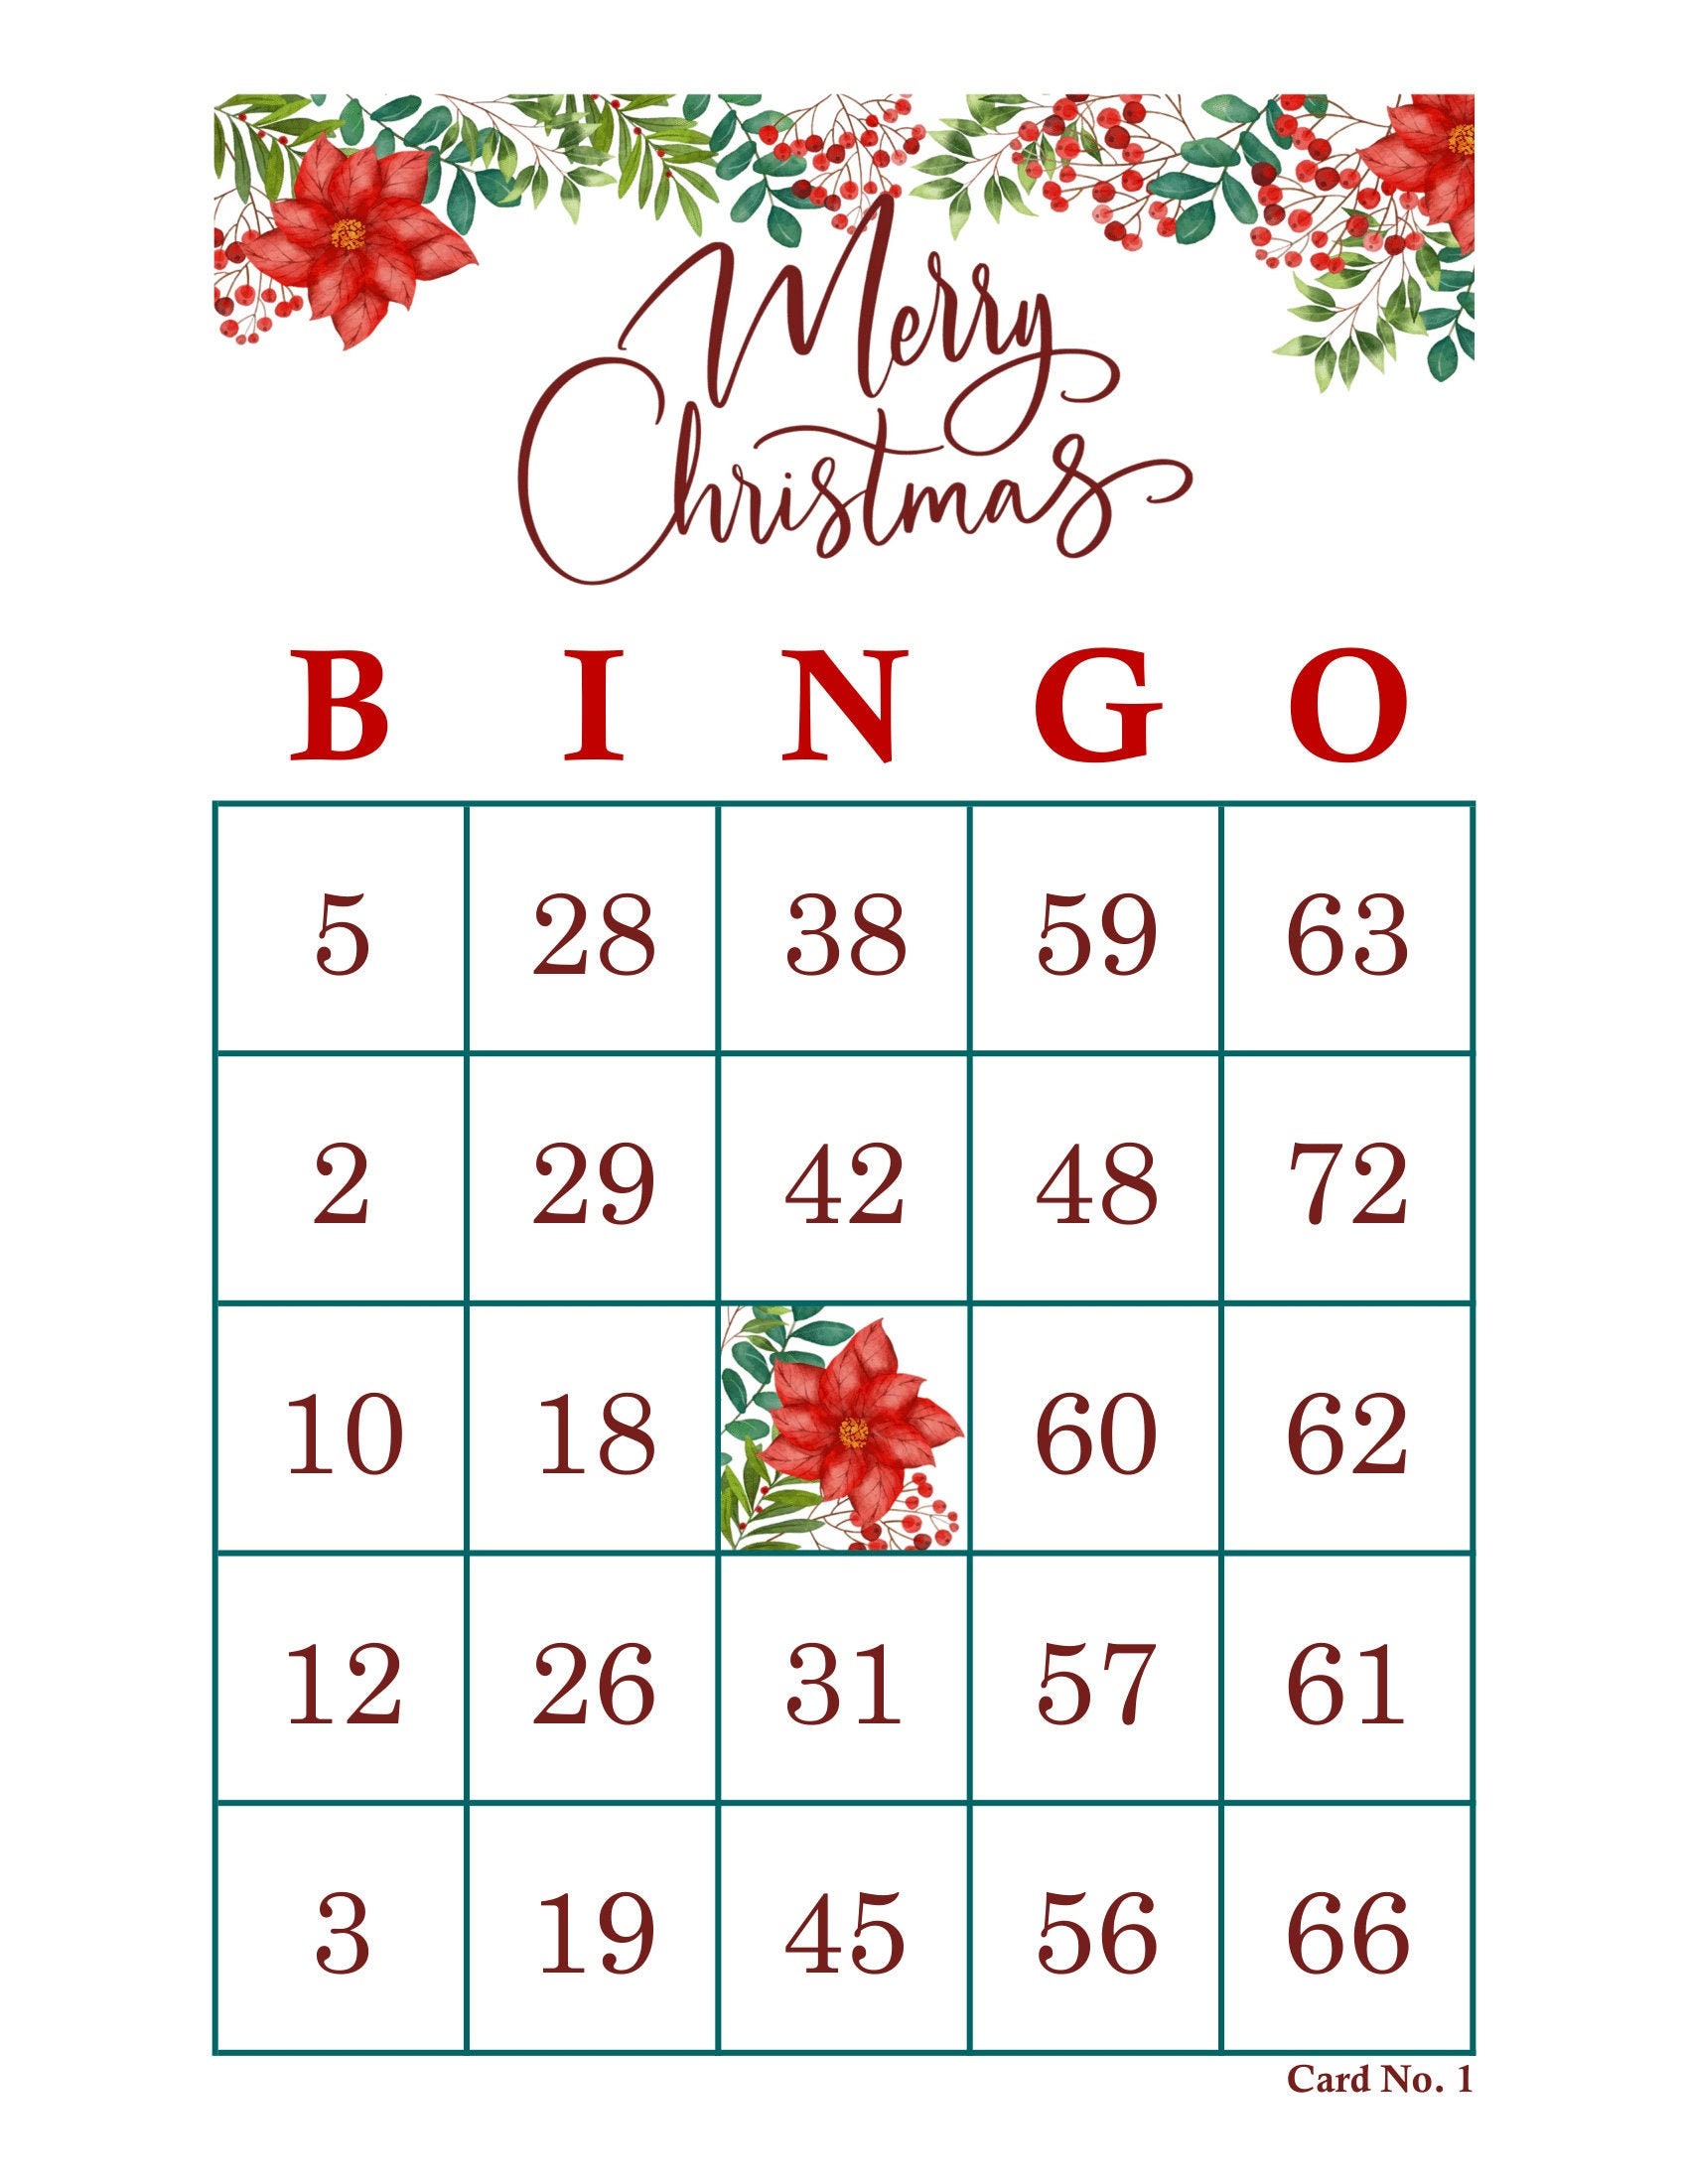 500-christmas-bingo-cards-pdf-download-1-and-2-per-page-etsy-australia